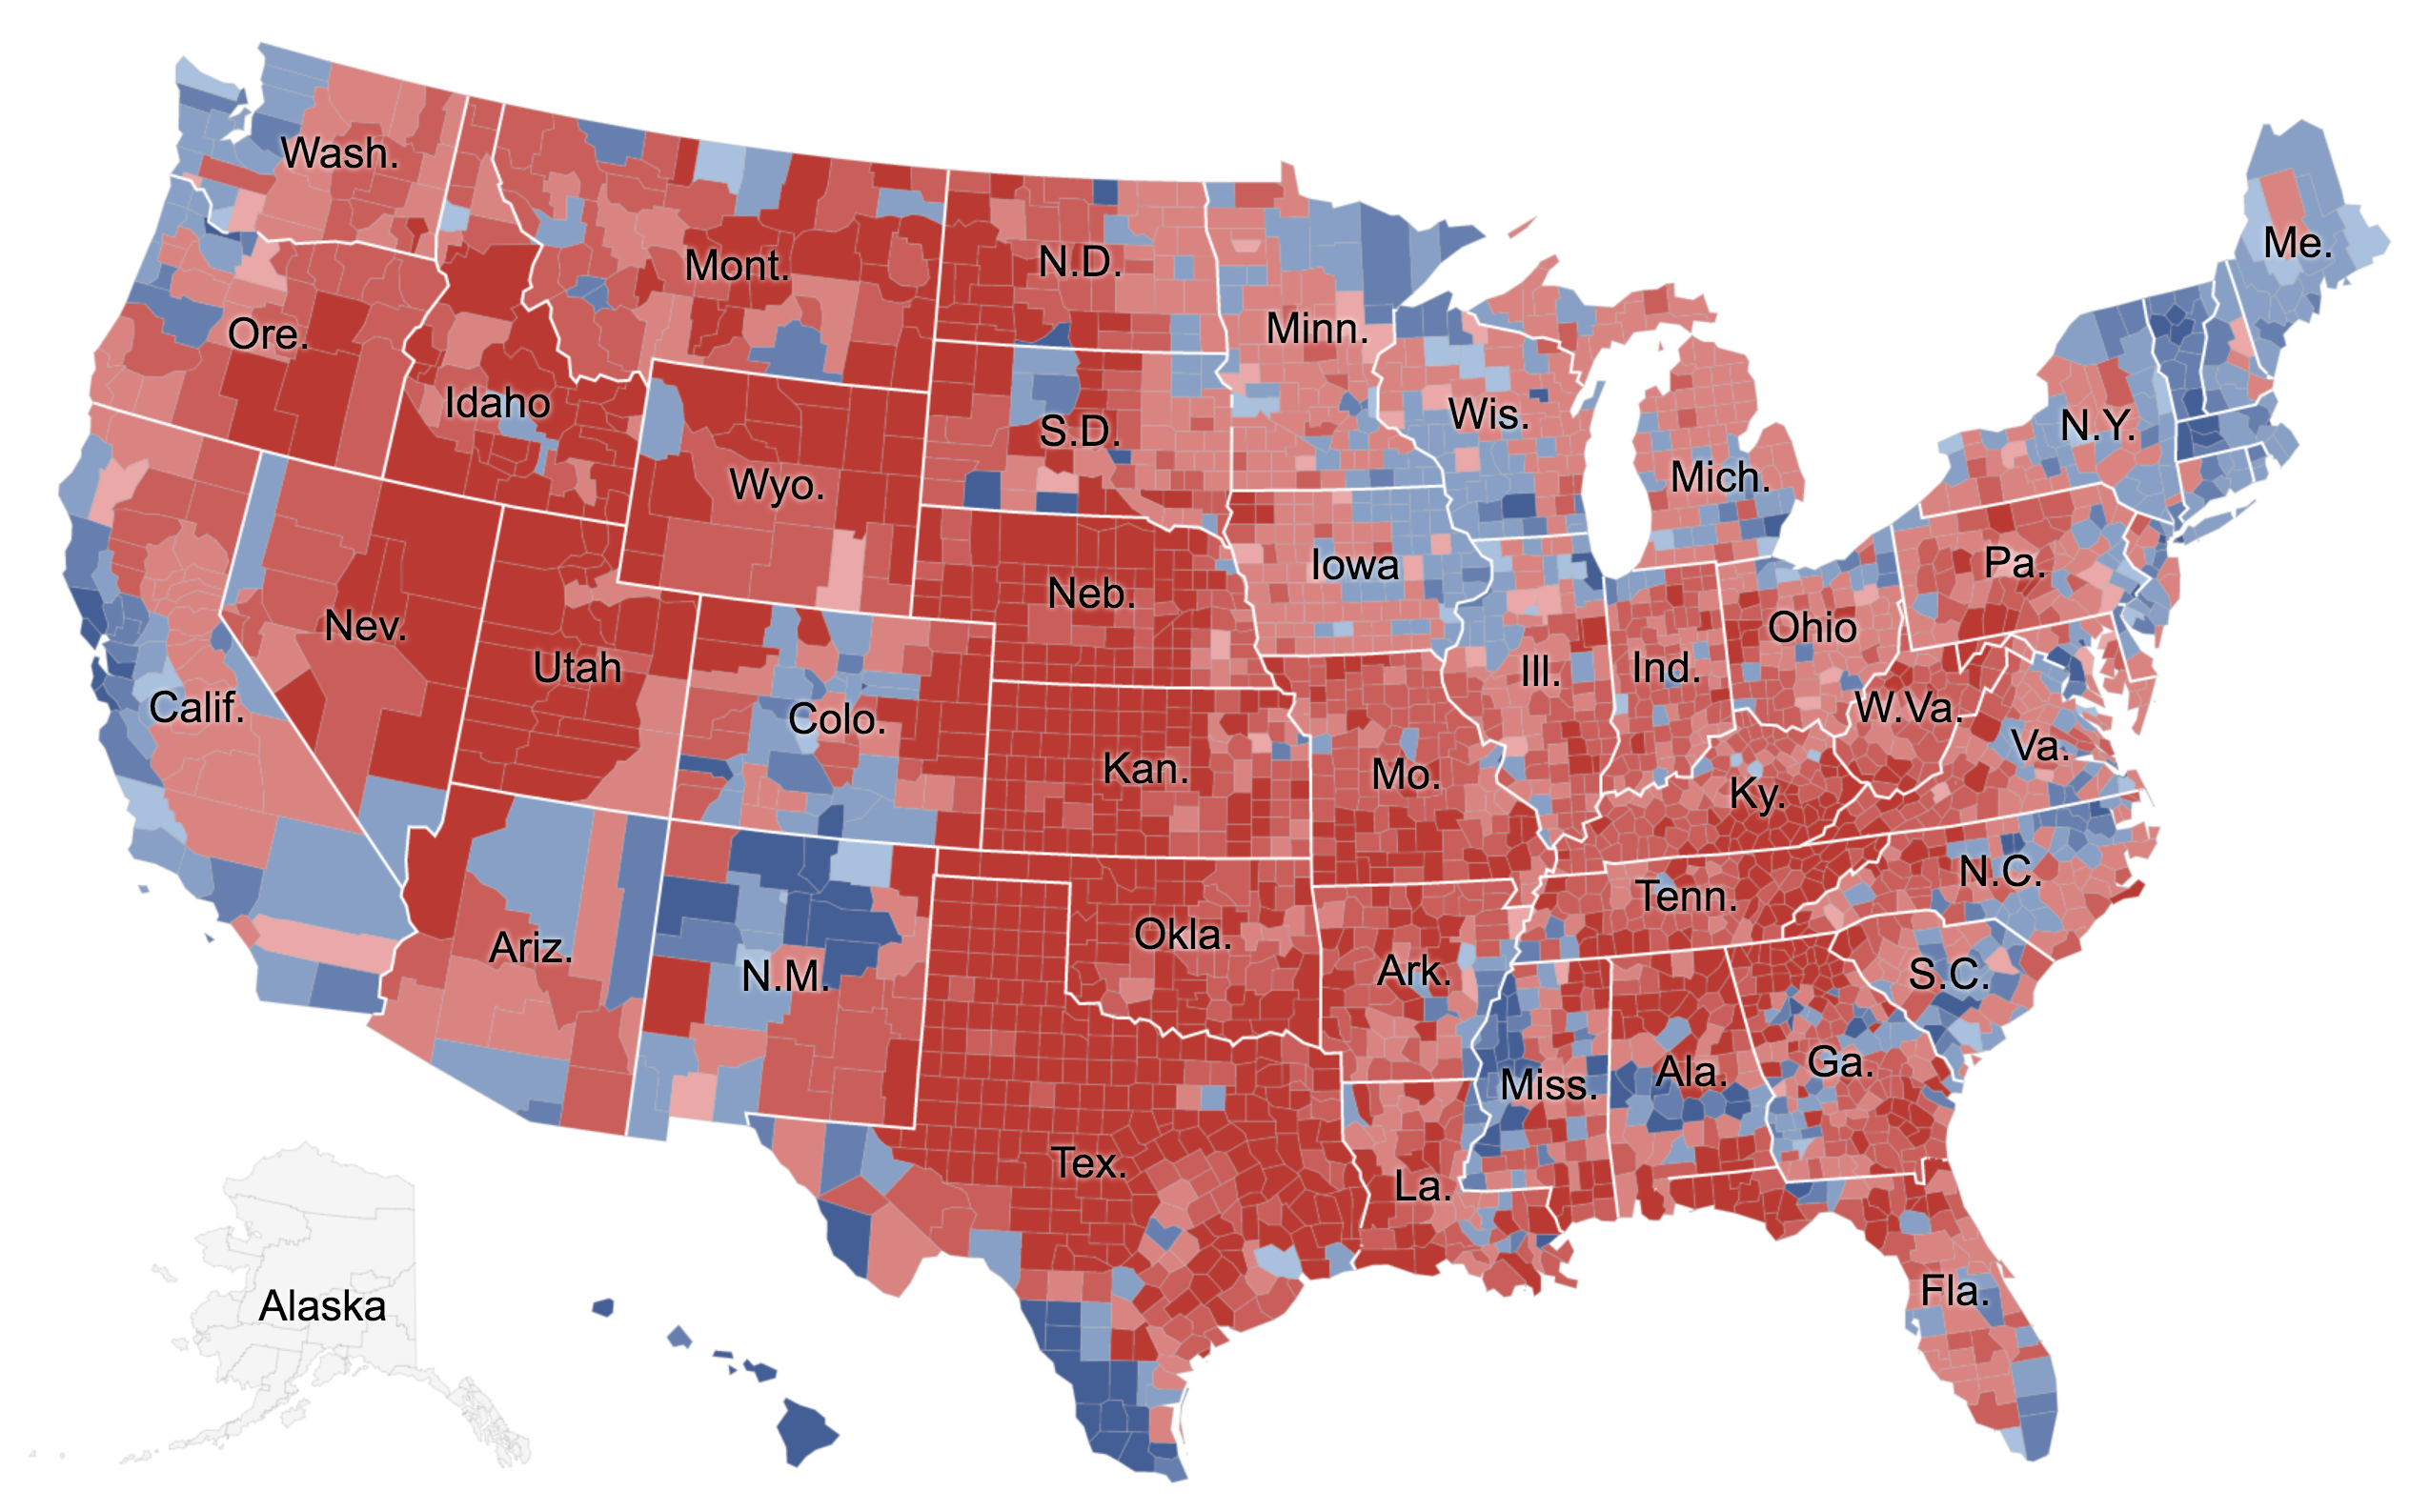 nyt-mapa-electoral-trump-hillary